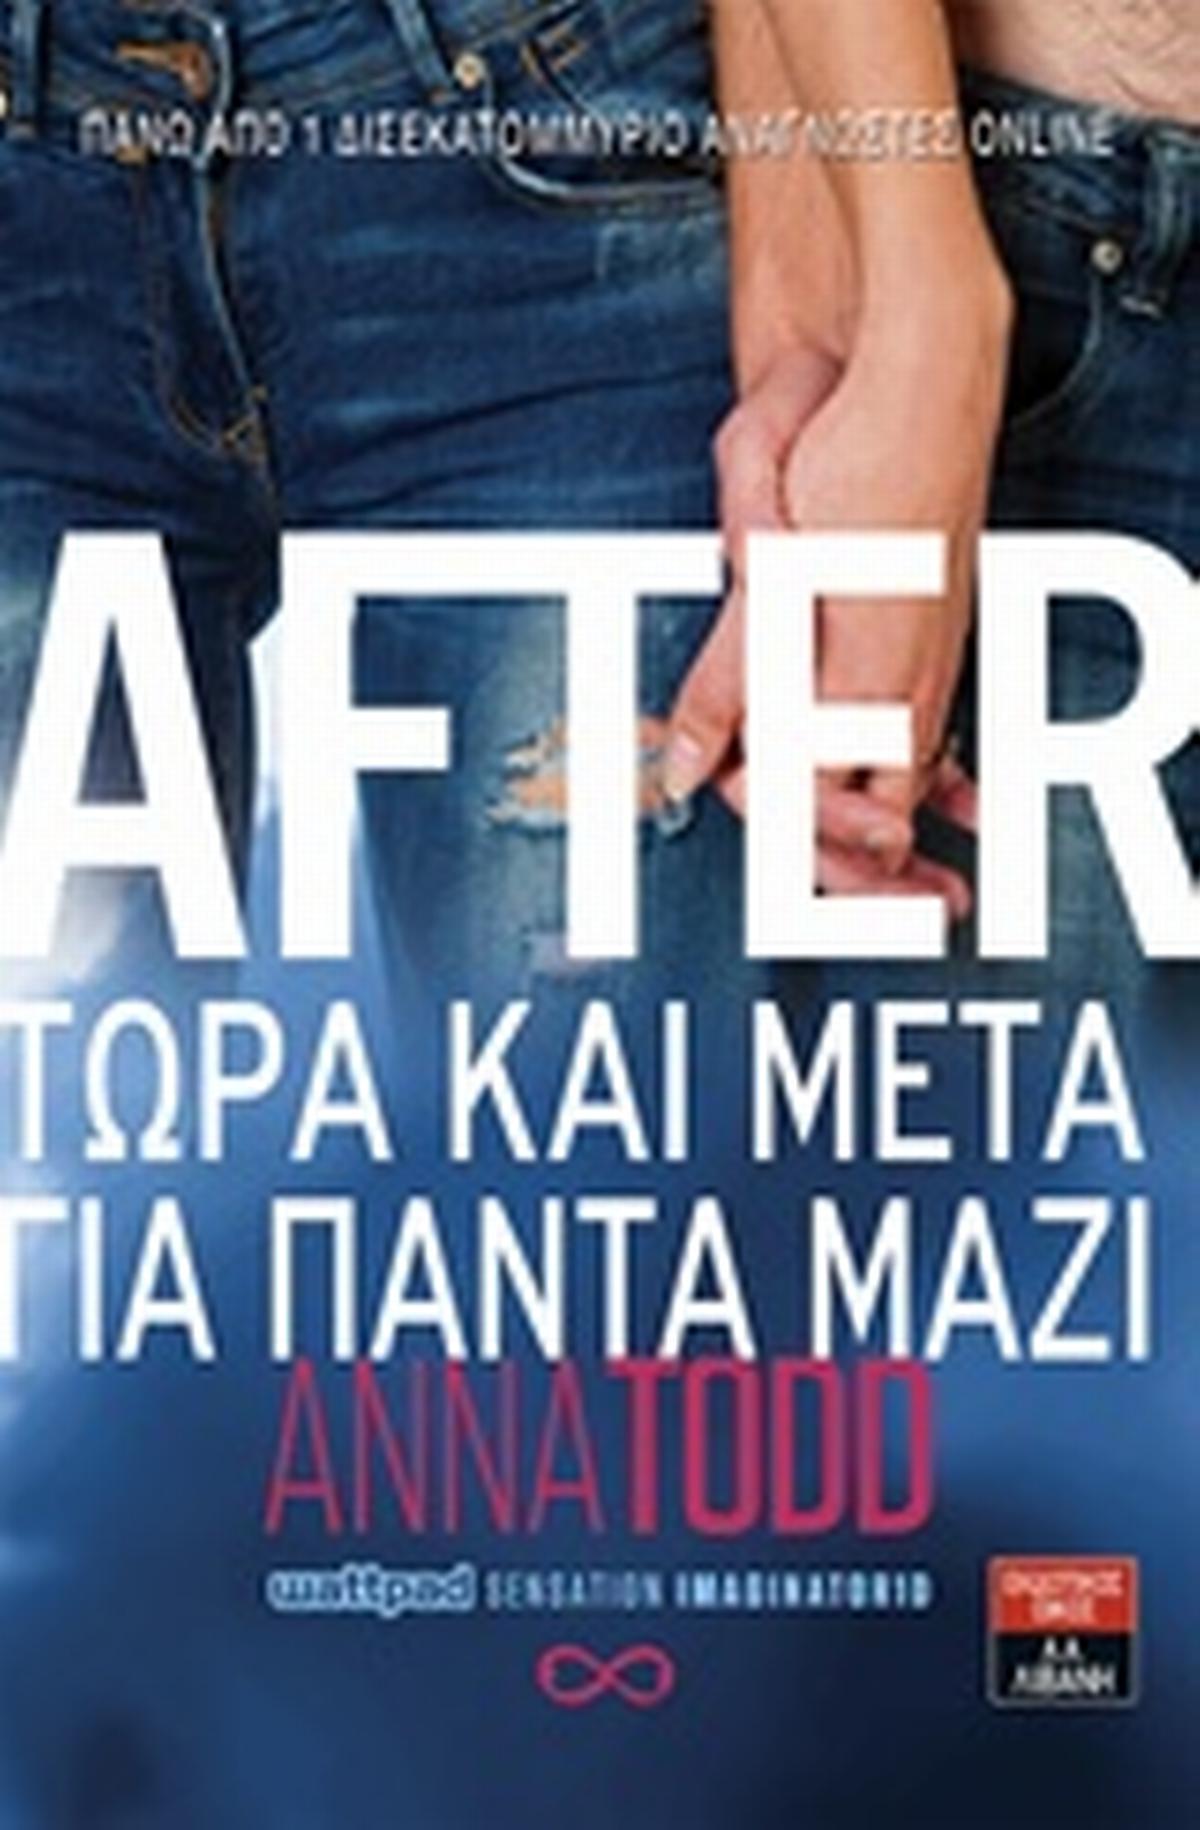 After: Τώρα και μετά για πάντα μαζί